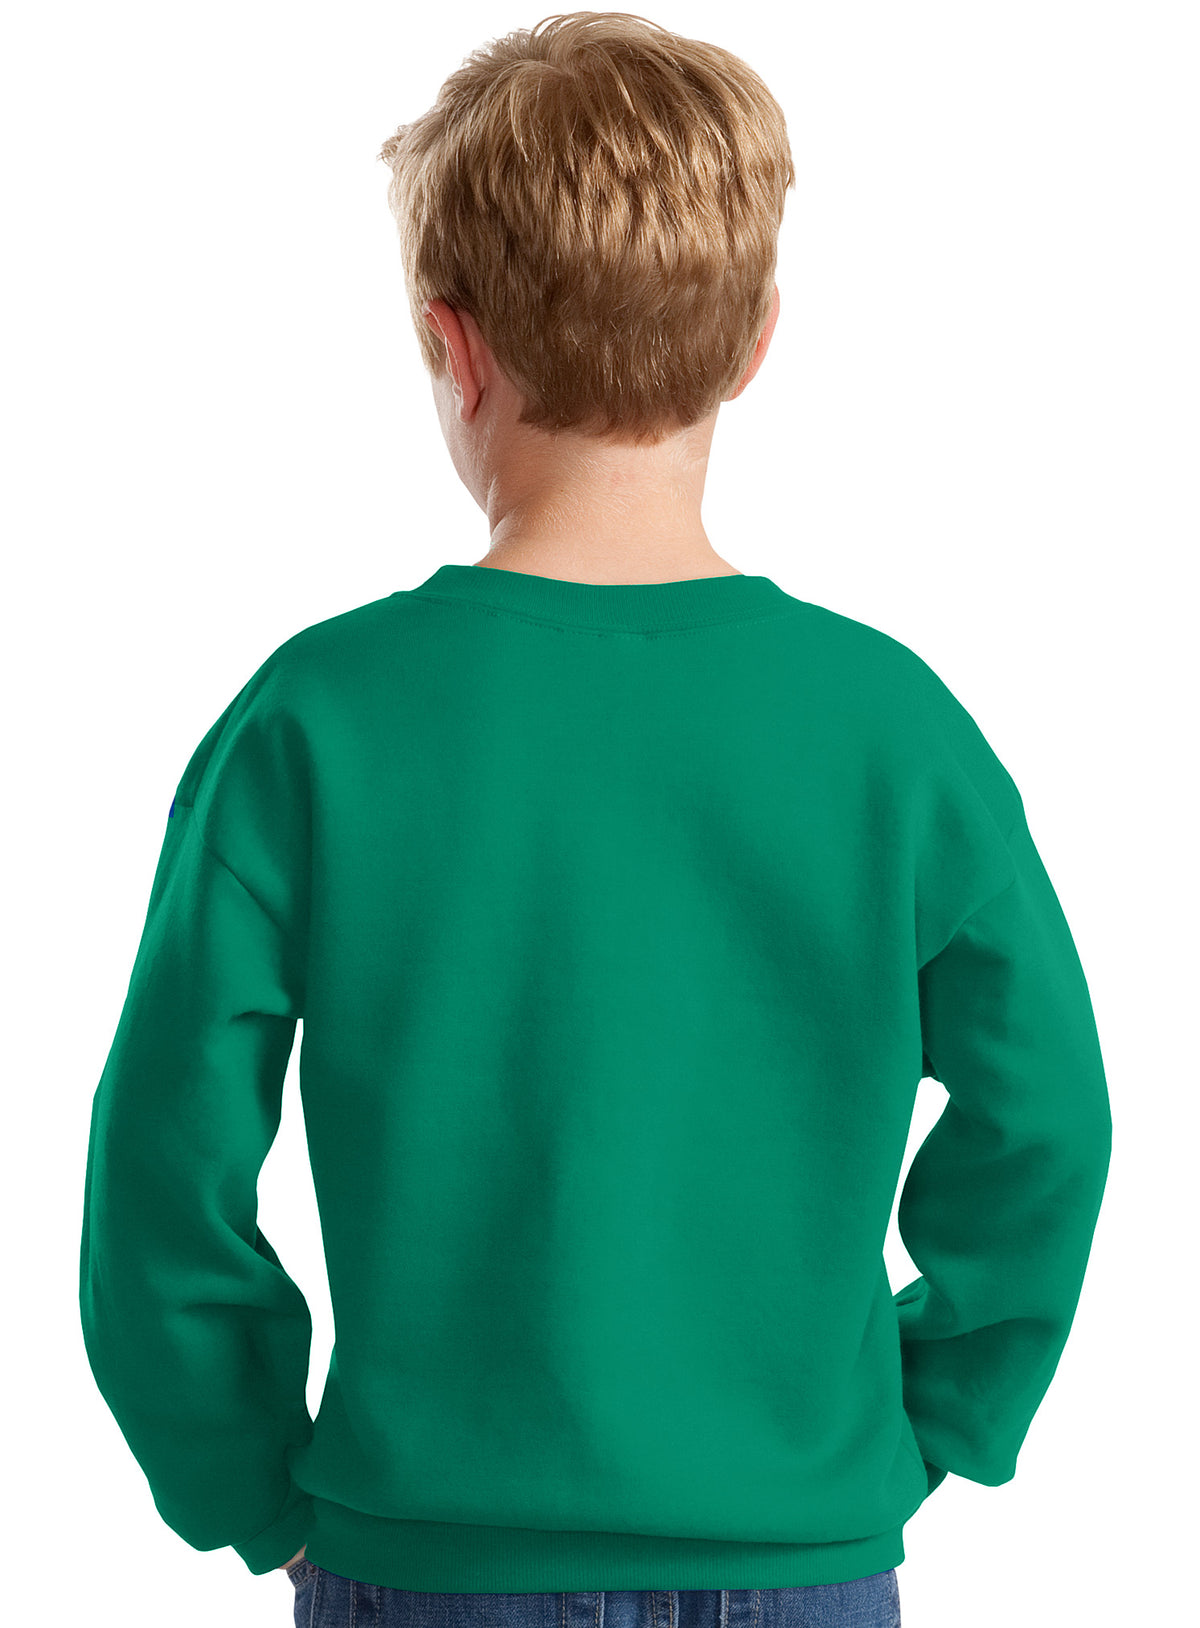 Kid's Santa's Elf Costume | Novelty Christmas Sweater, Holiday Child Sweatshirt